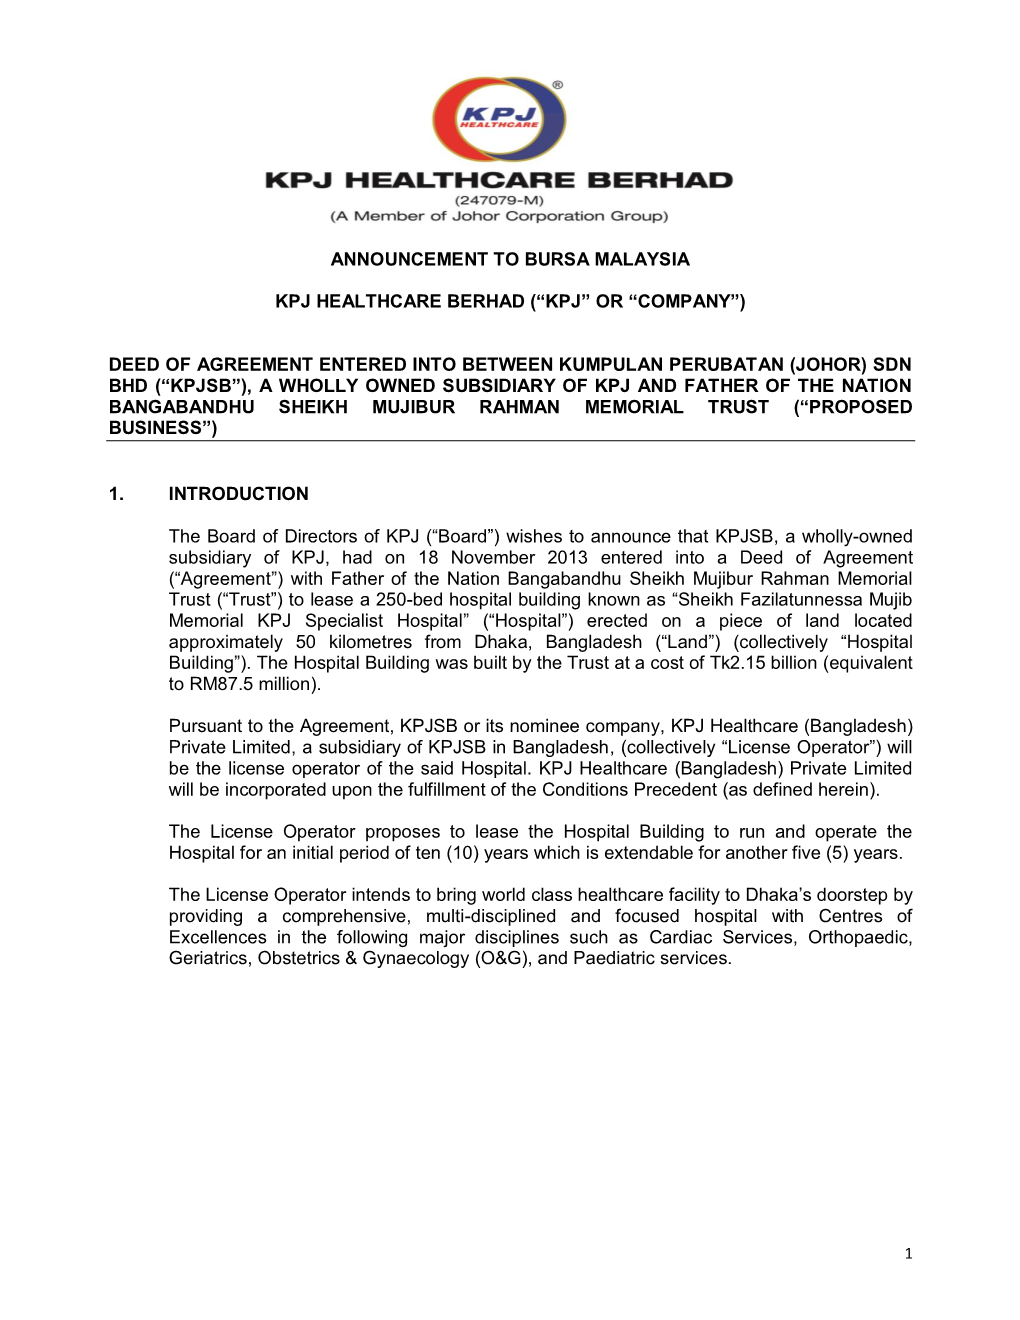 Announcement to Bursa Malaysia Kpj